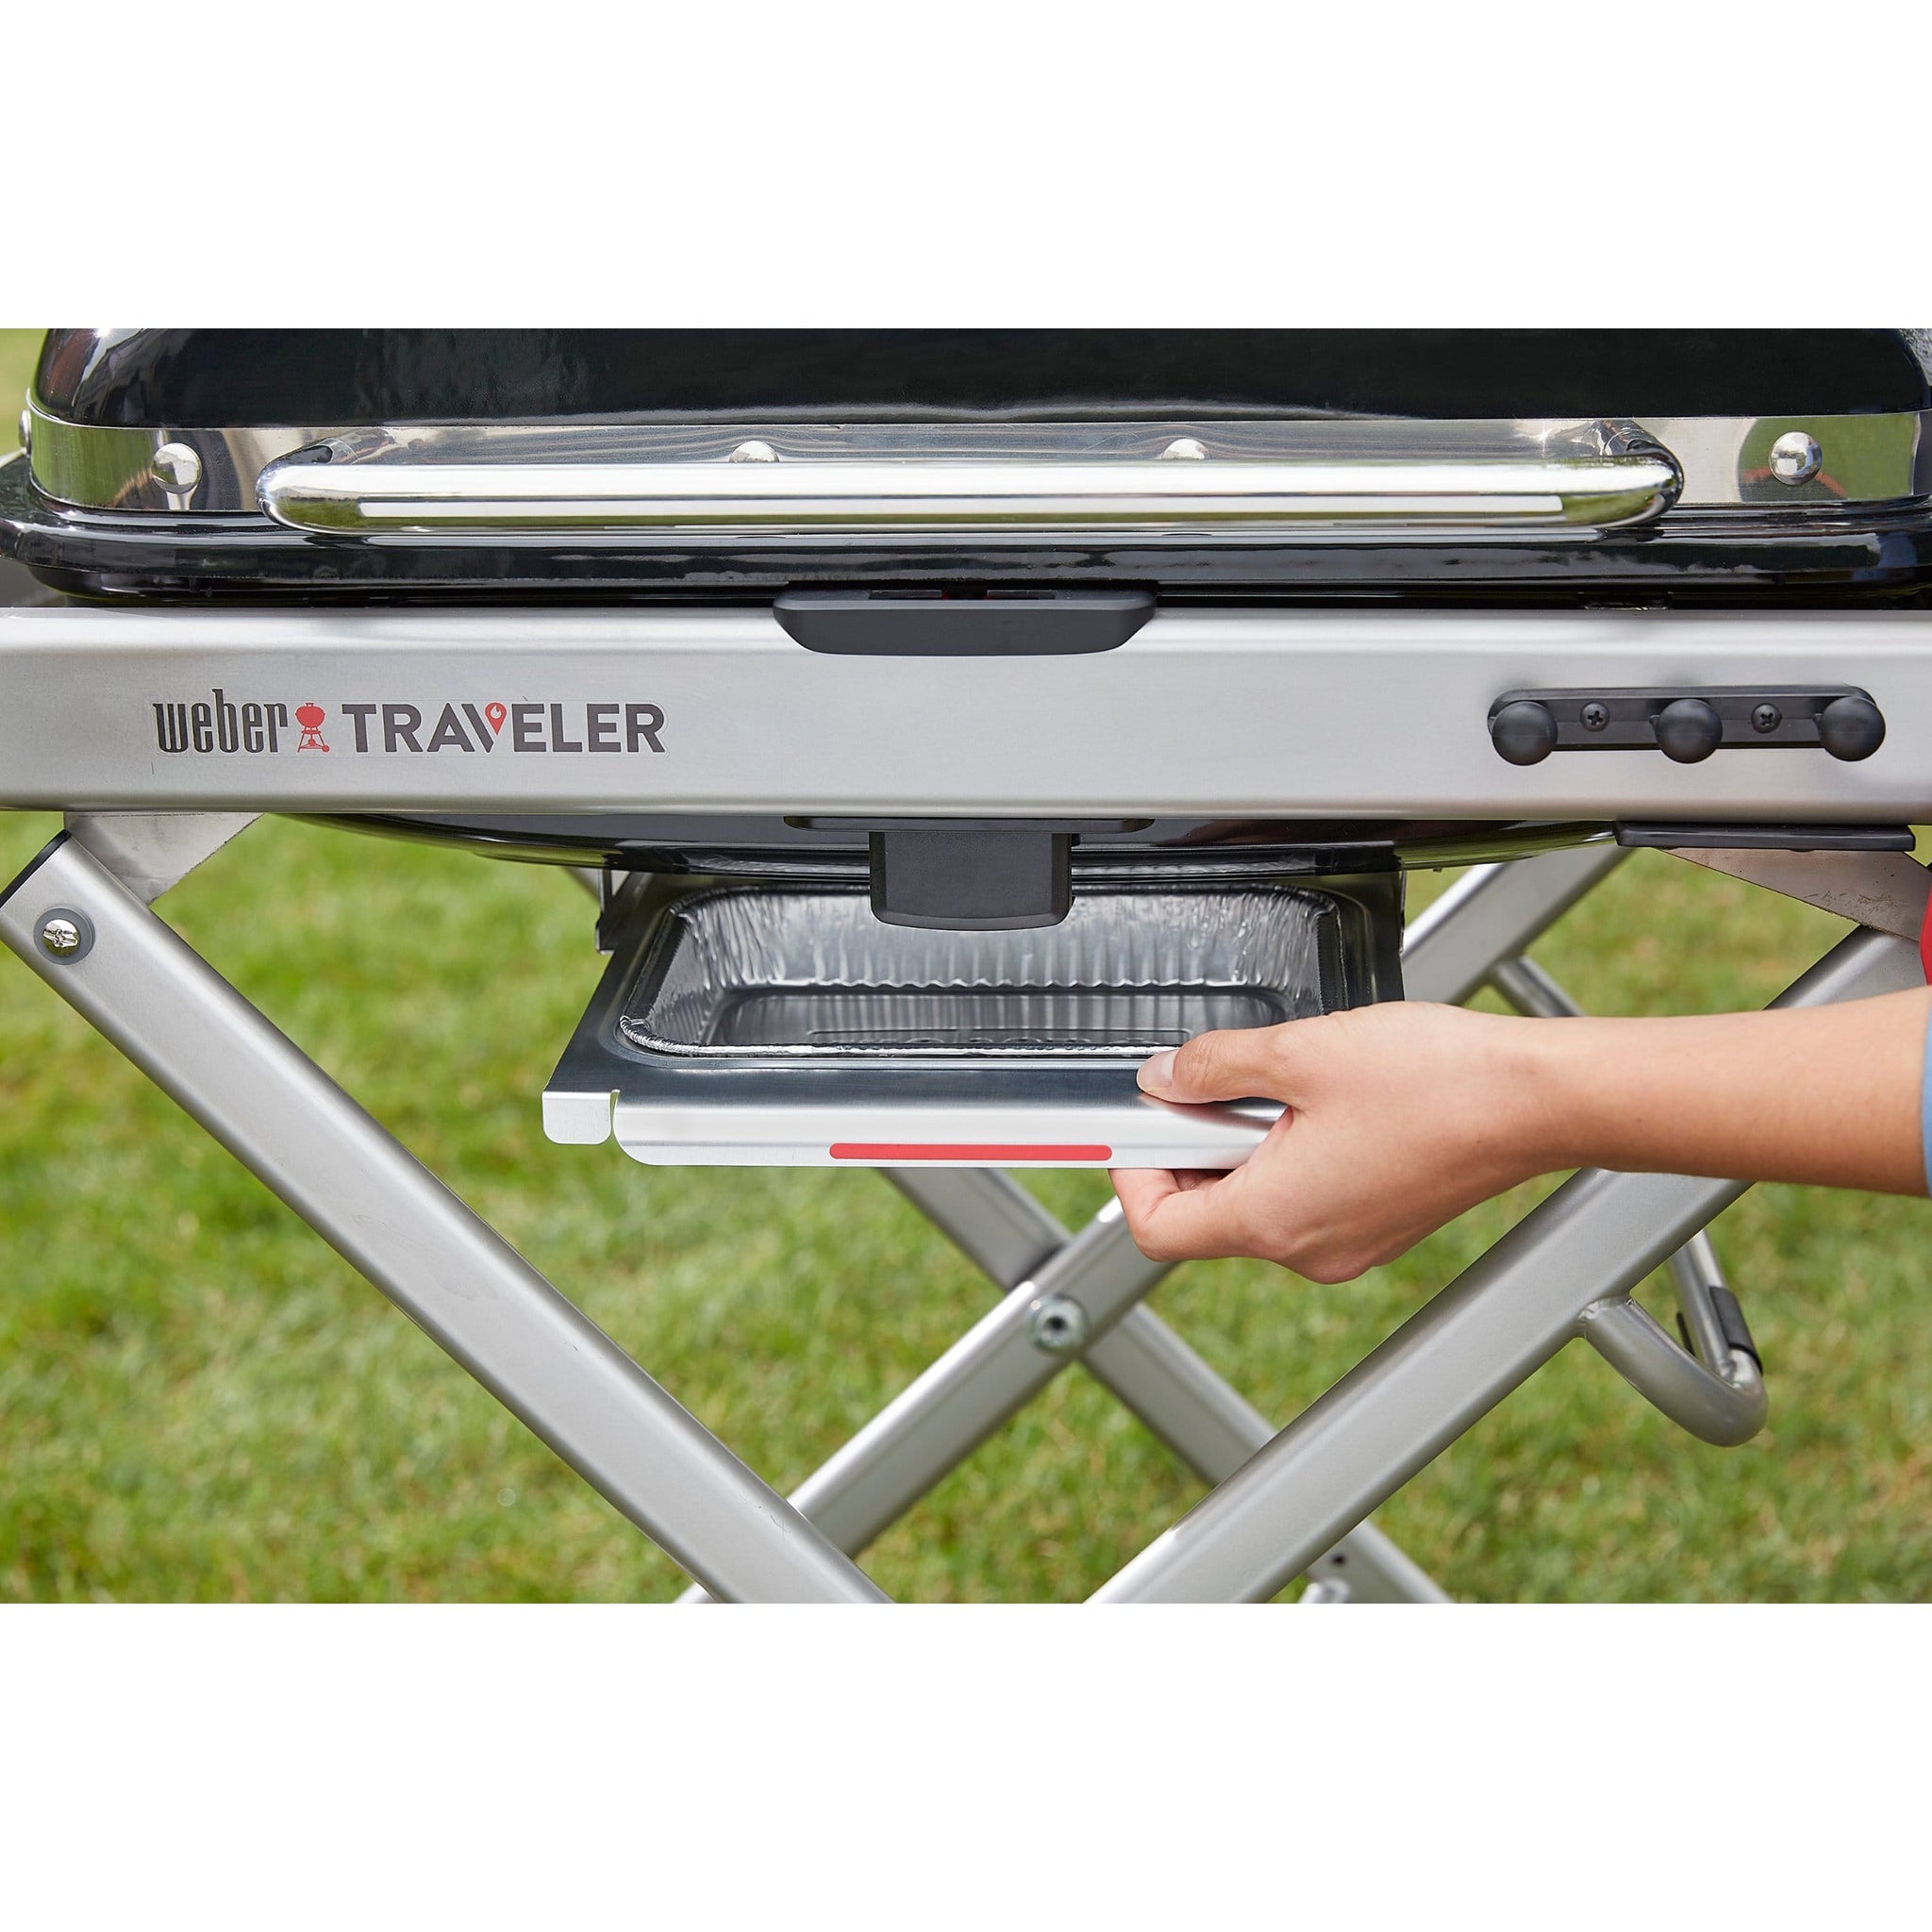 Weber Traveler Portable Gas Grill Bundle